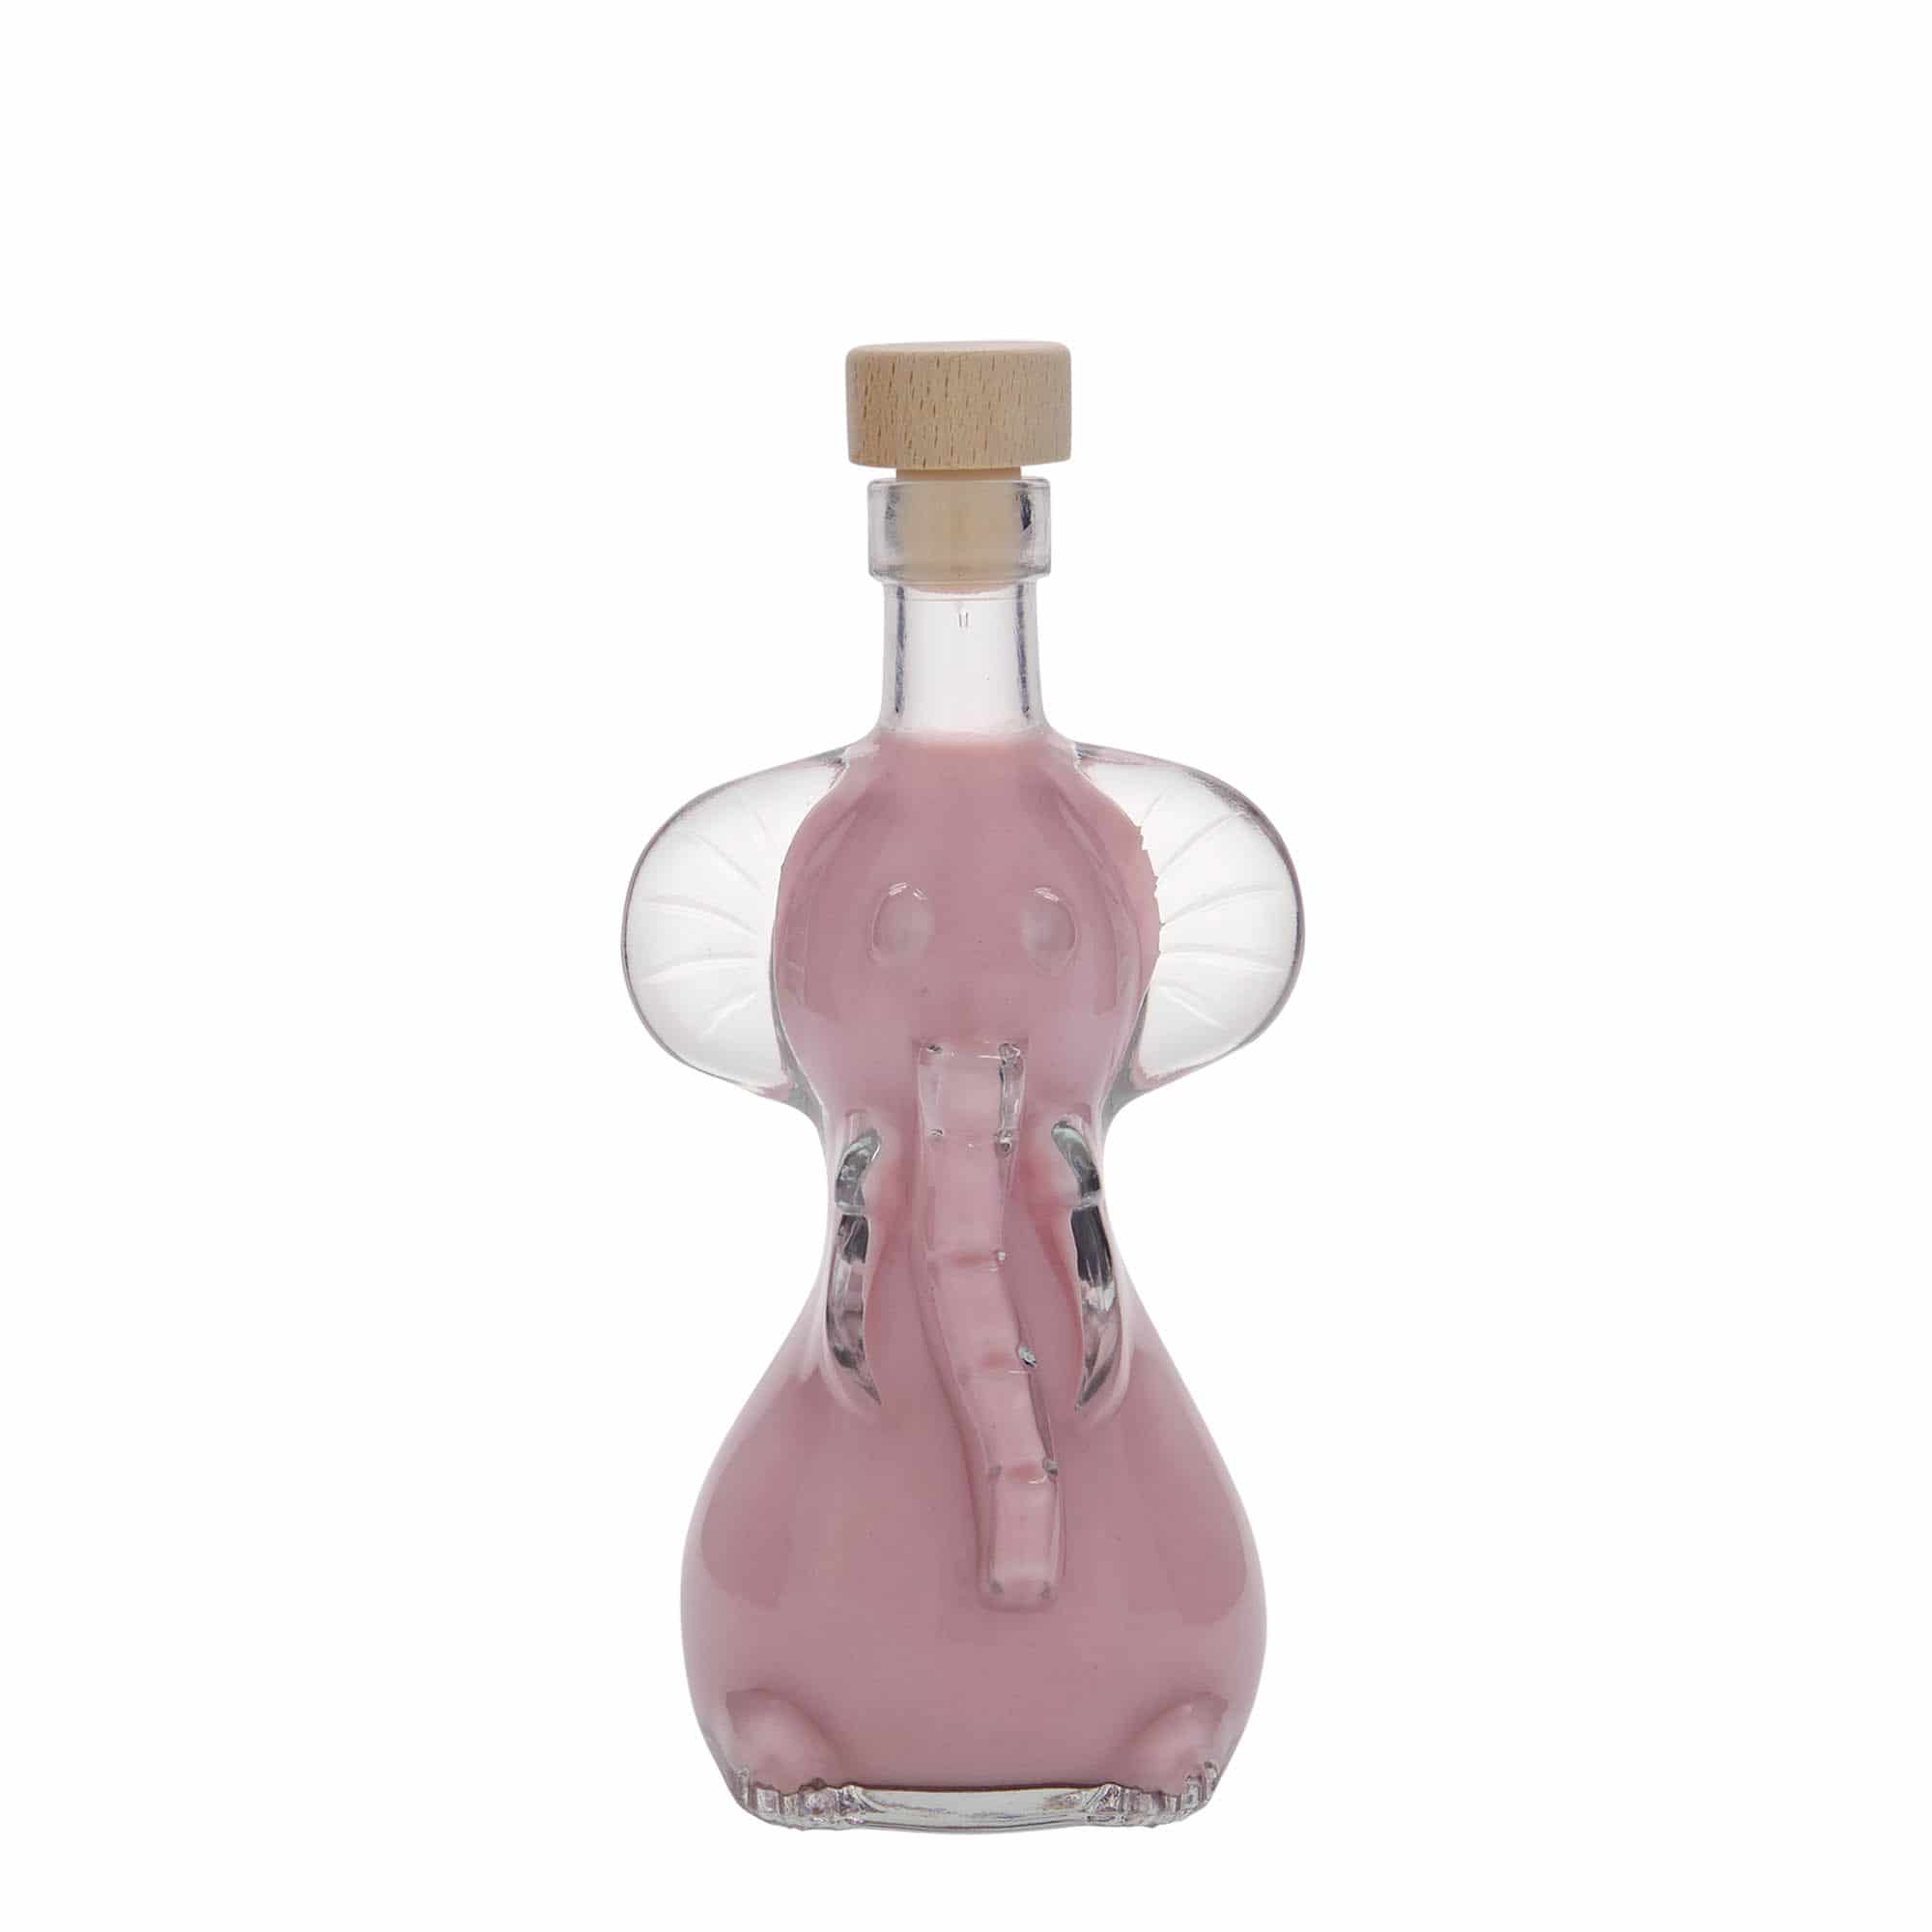 200 ml glass bottle 'Elephant', closure: cork